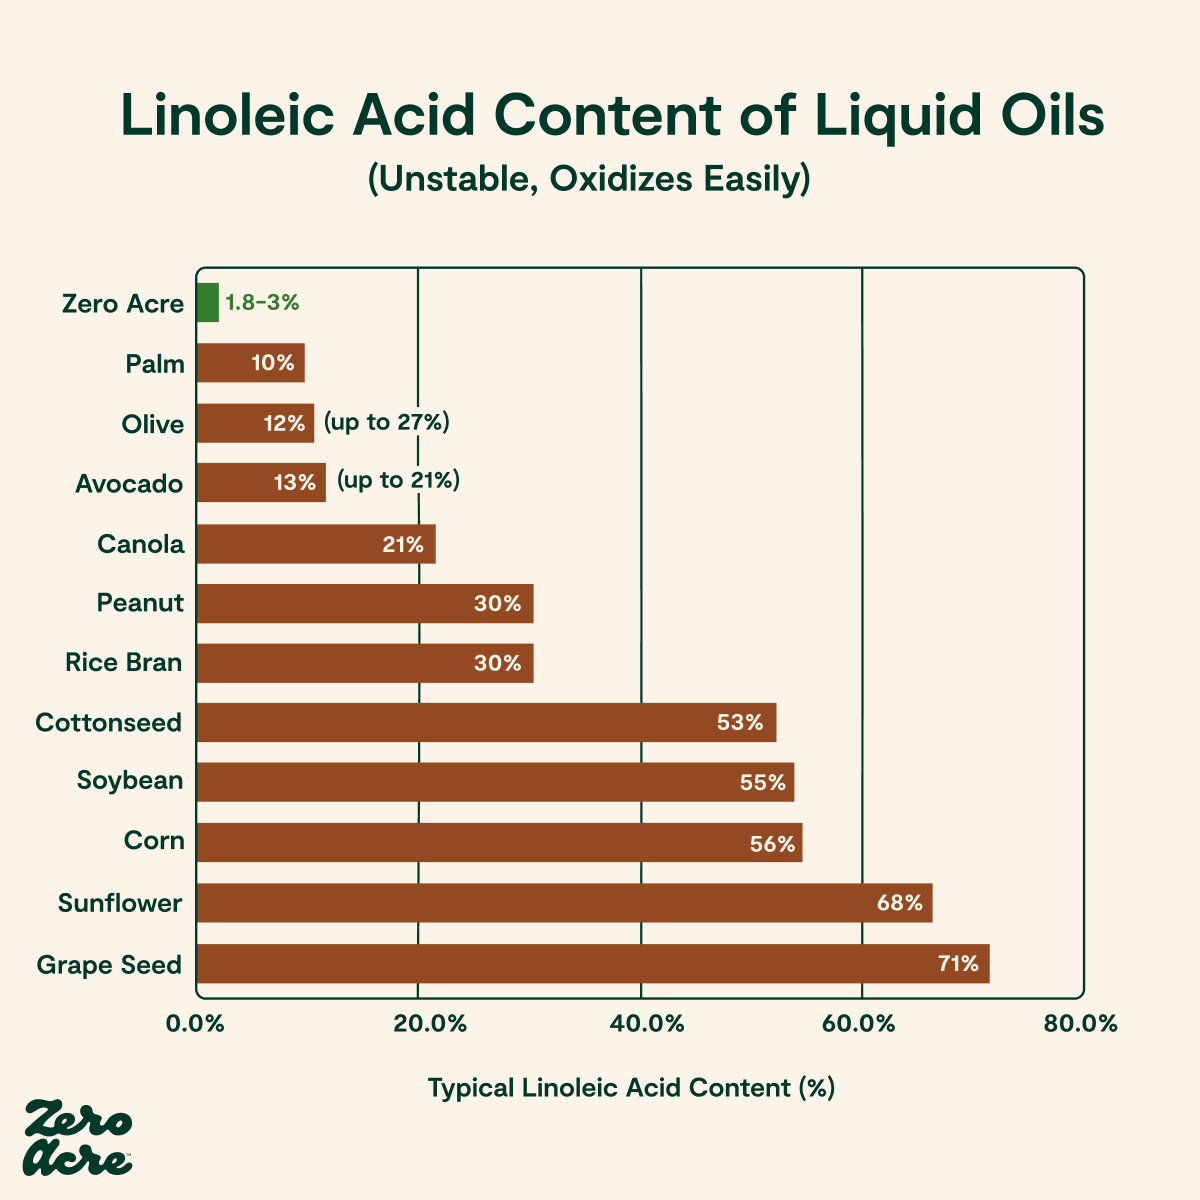 High Linoleic Safflower Oil